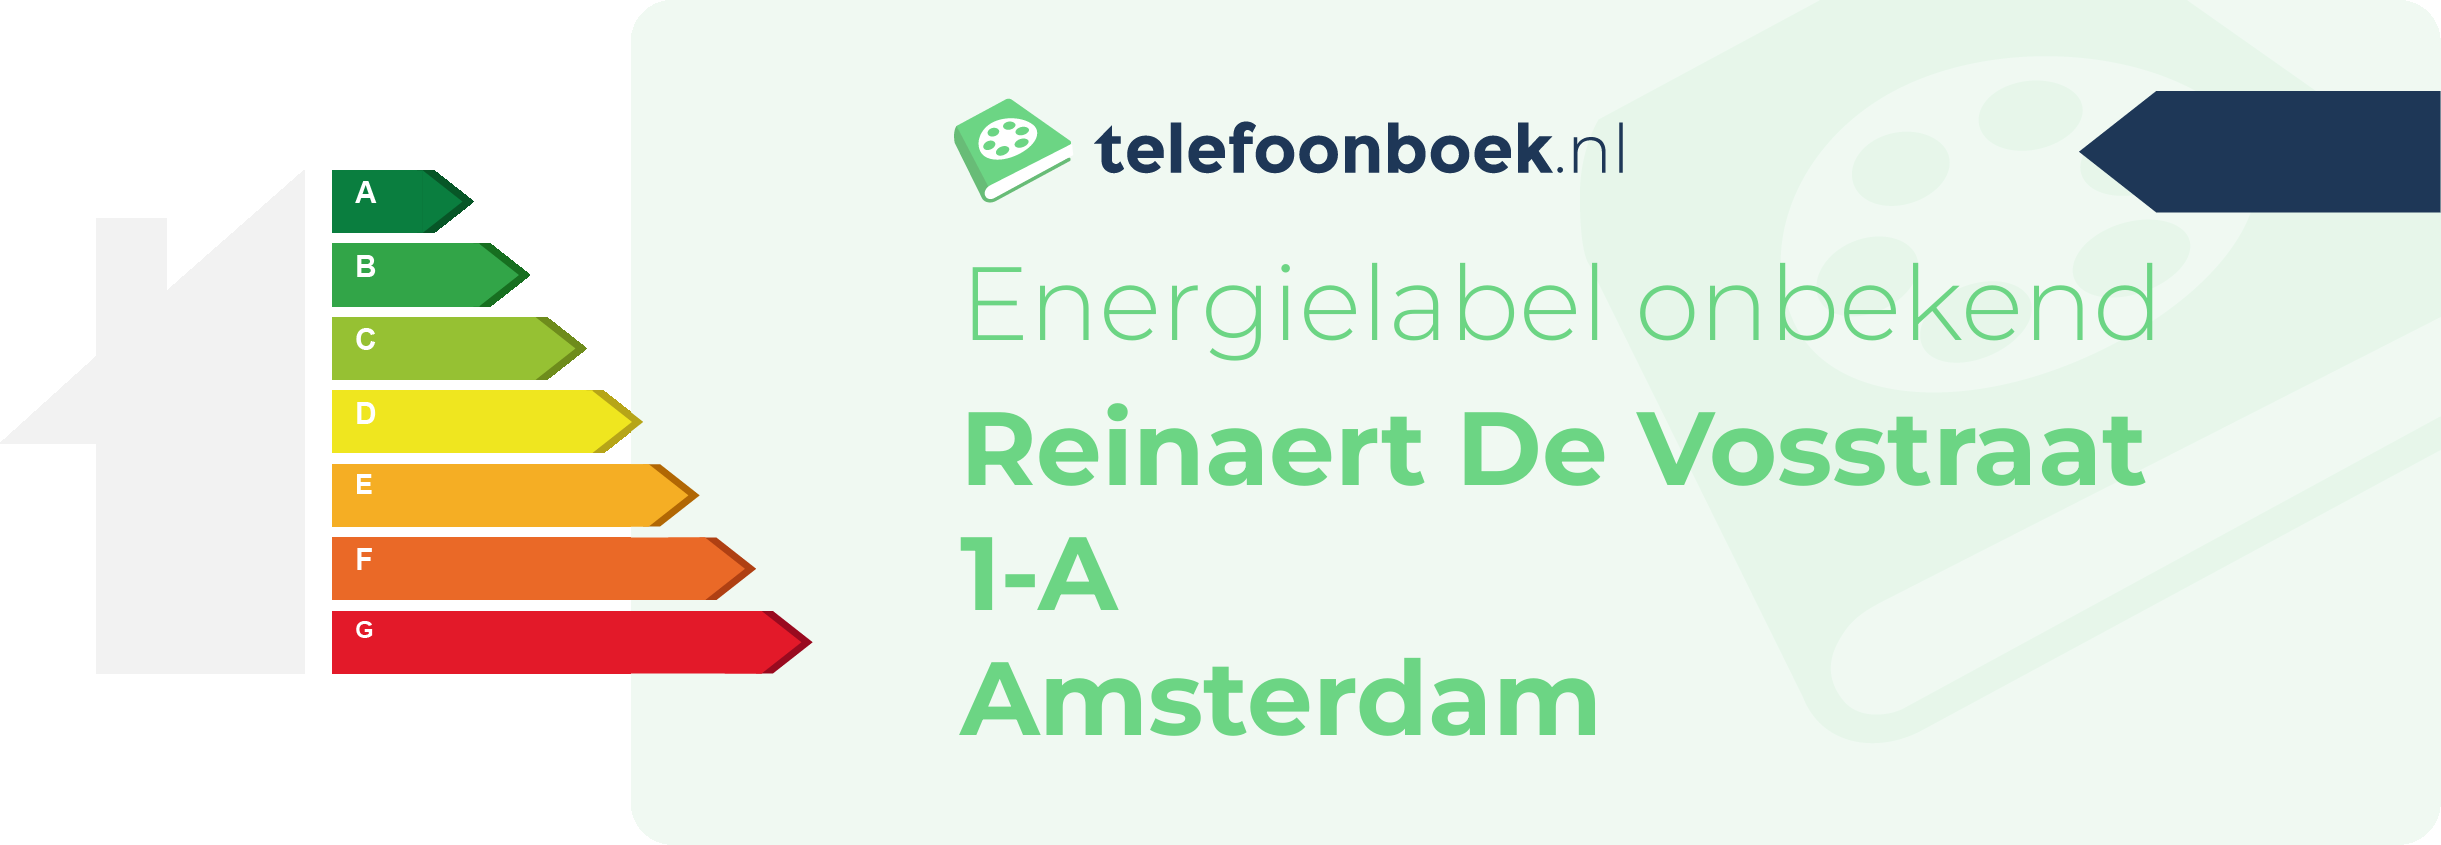 Energielabel Reinaert De Vosstraat 1-A Amsterdam